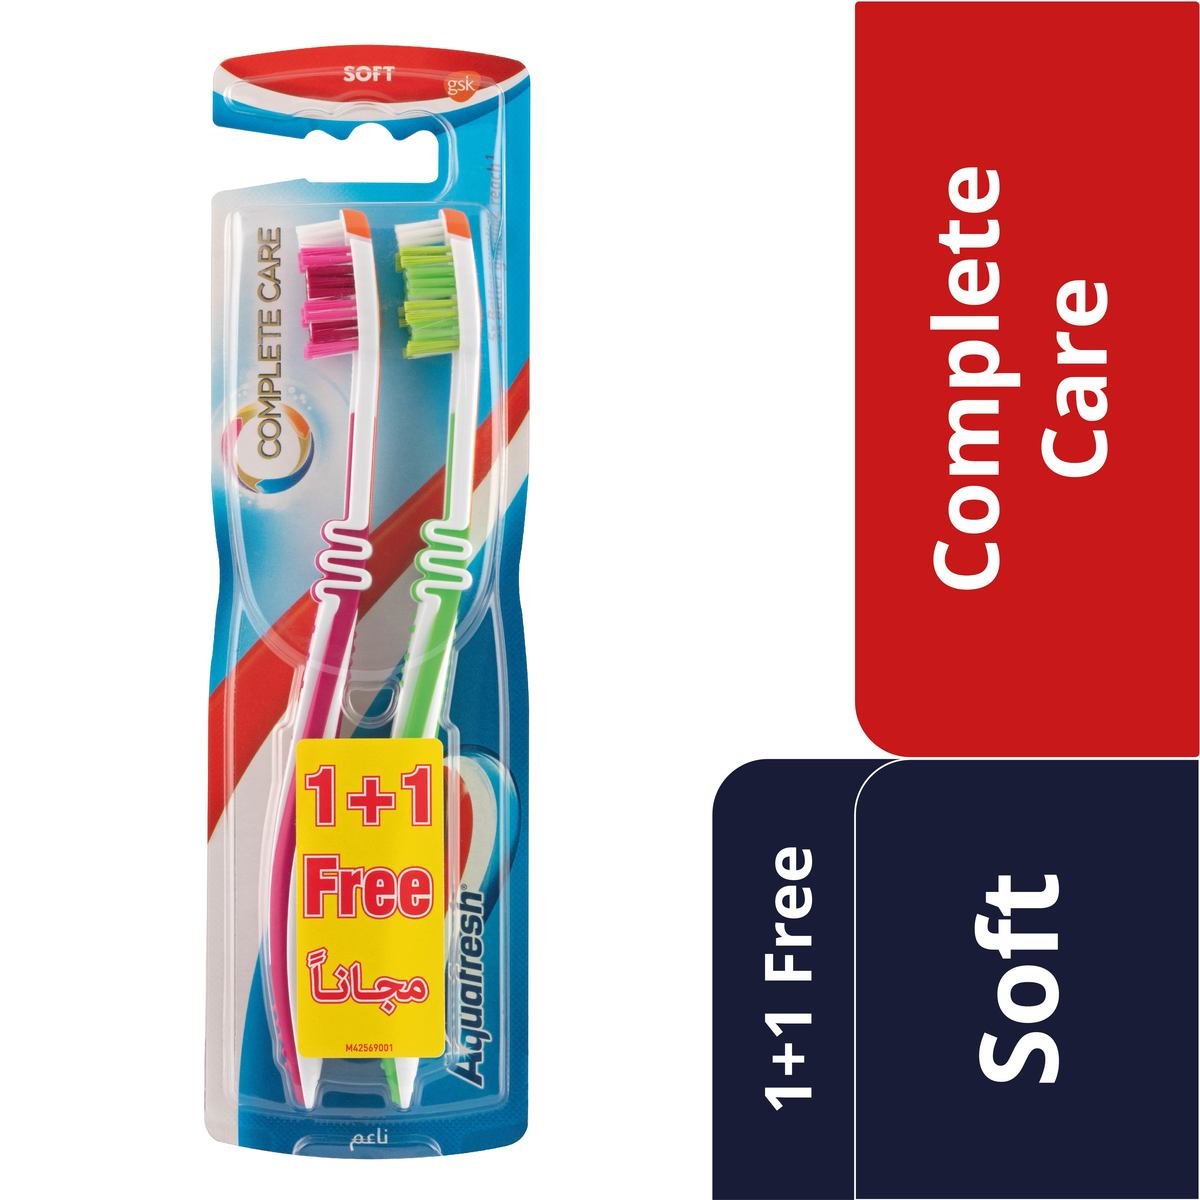 Aquafresh Complete Care Toothbrush Soft Assorted Color 2 pcs